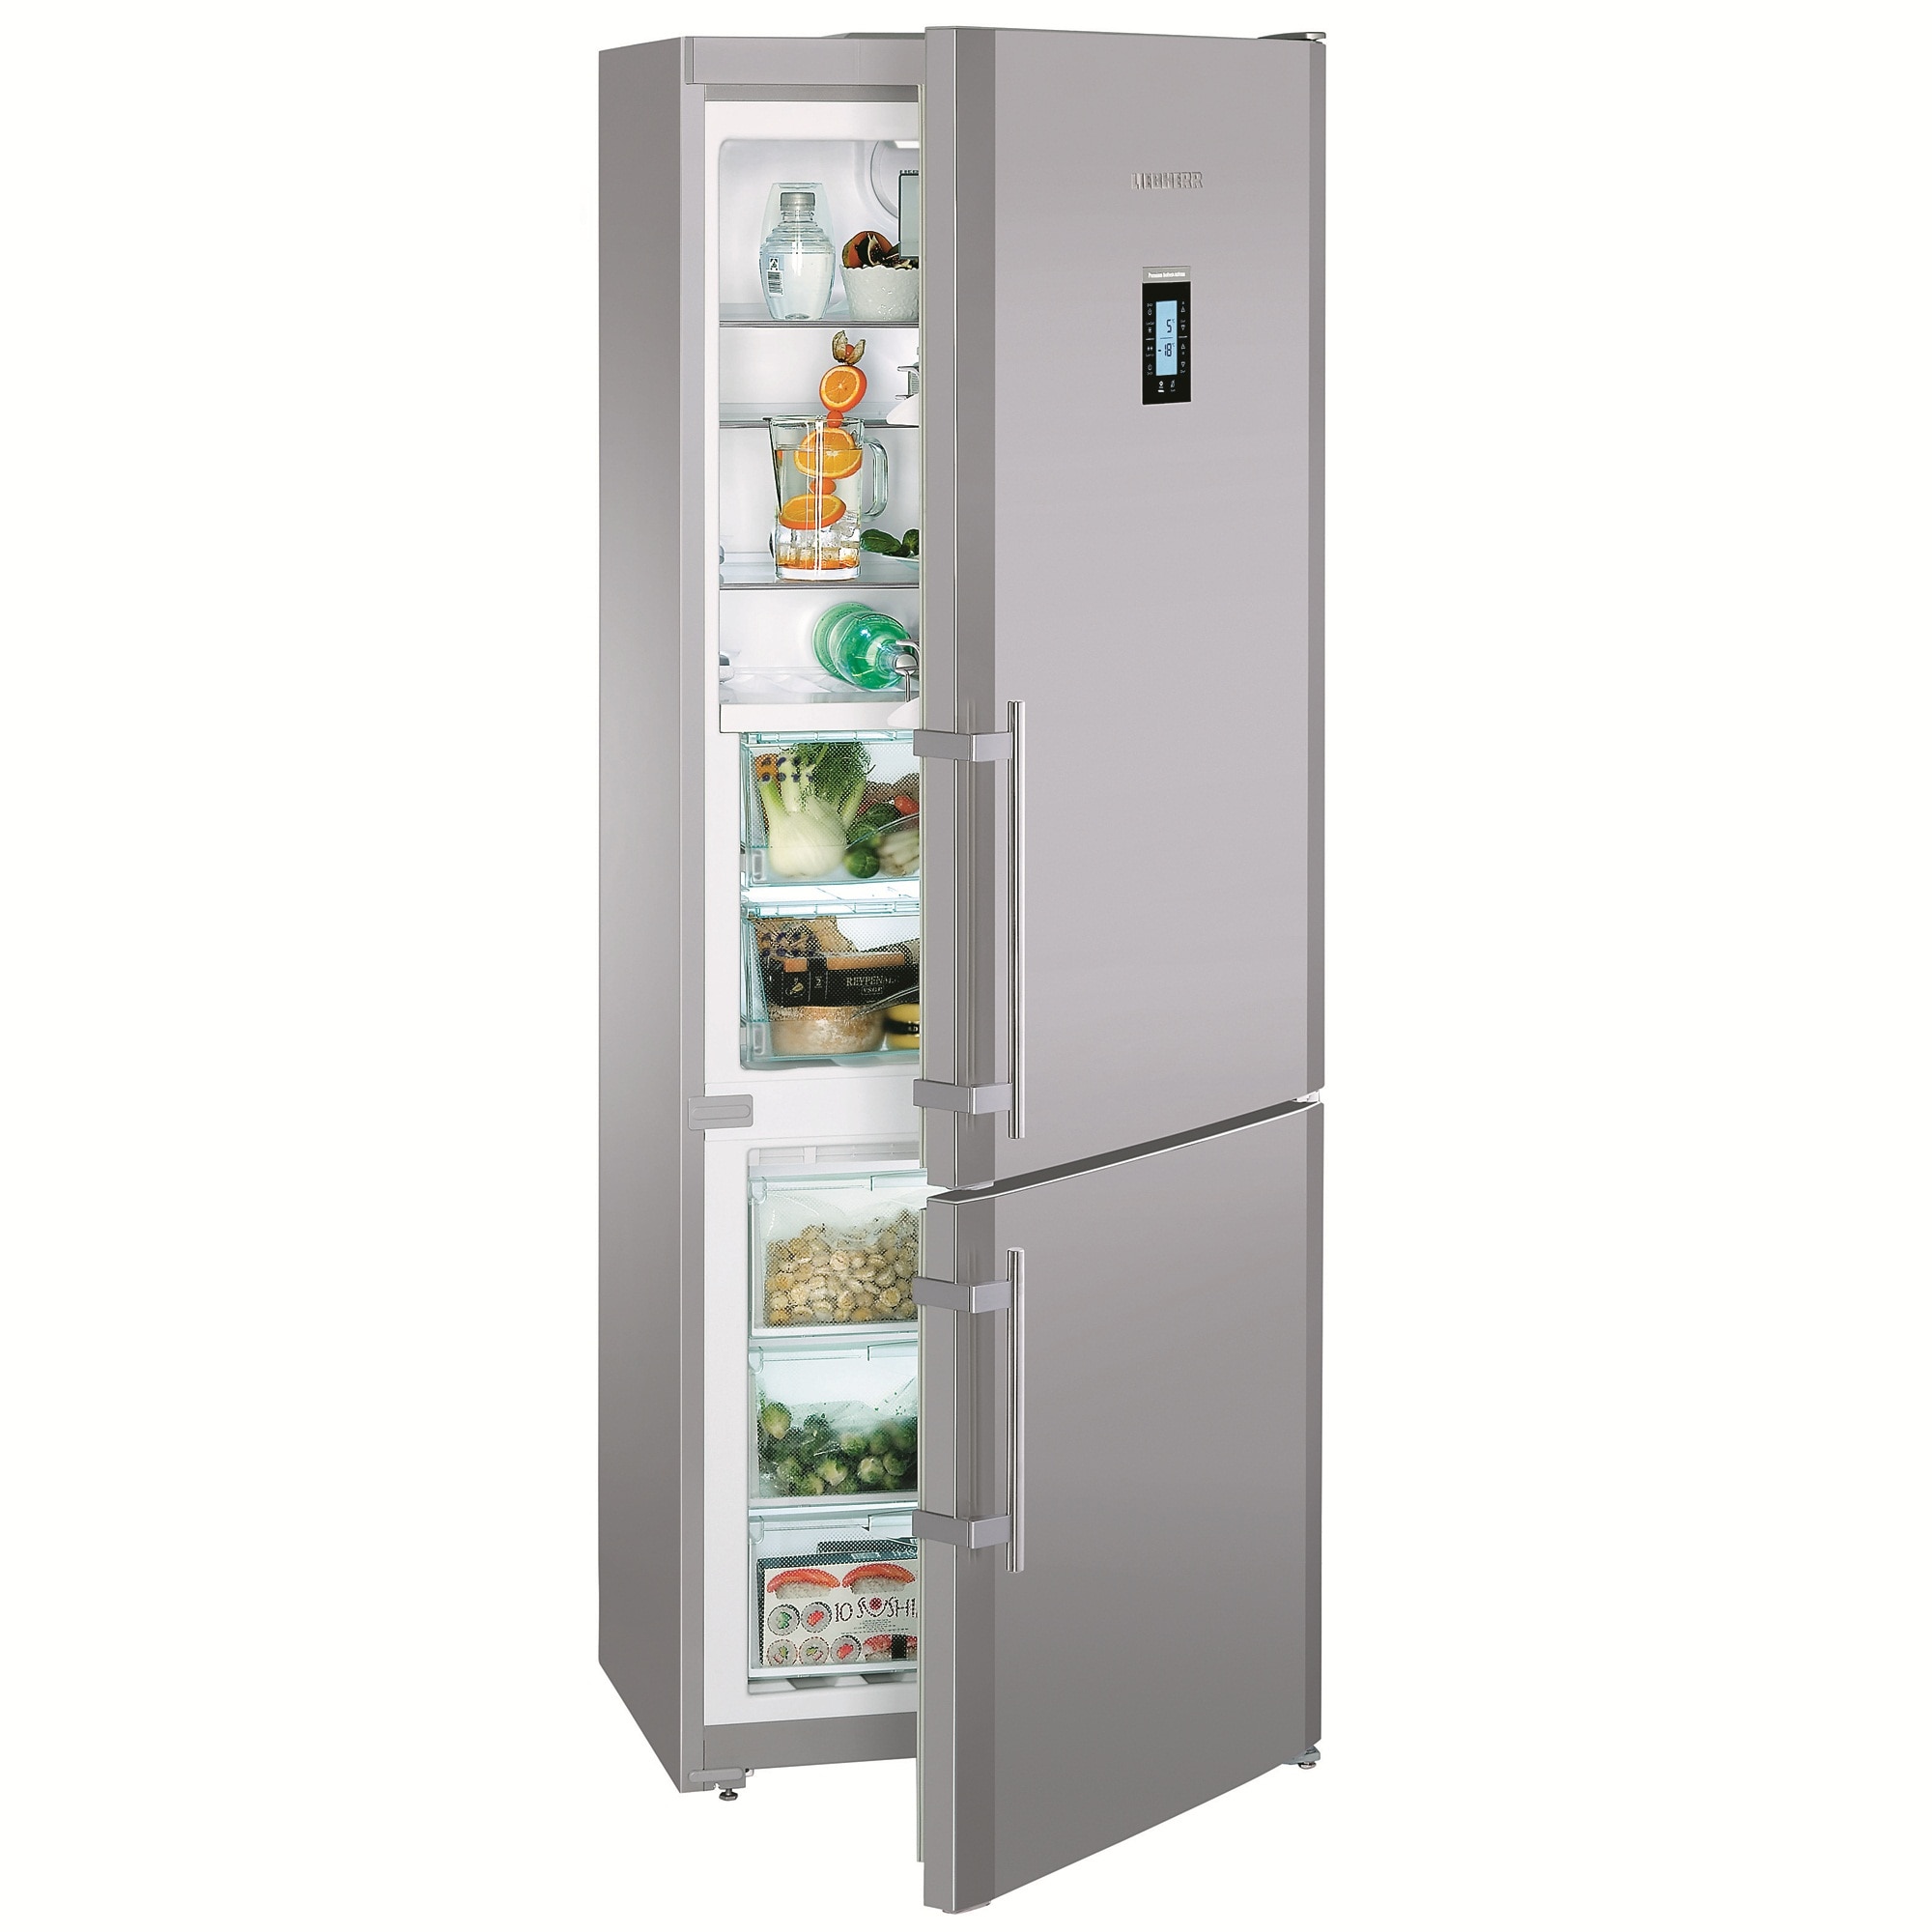 Васко ру холодильники. Холодильник Liebherr CNPESF 5156. Холодильник Liebherr CNPES 5156. Холодильник Liebherr CNPESF 5156, серебристый. Liebherr холодильники CNPESF 5156-21 001.